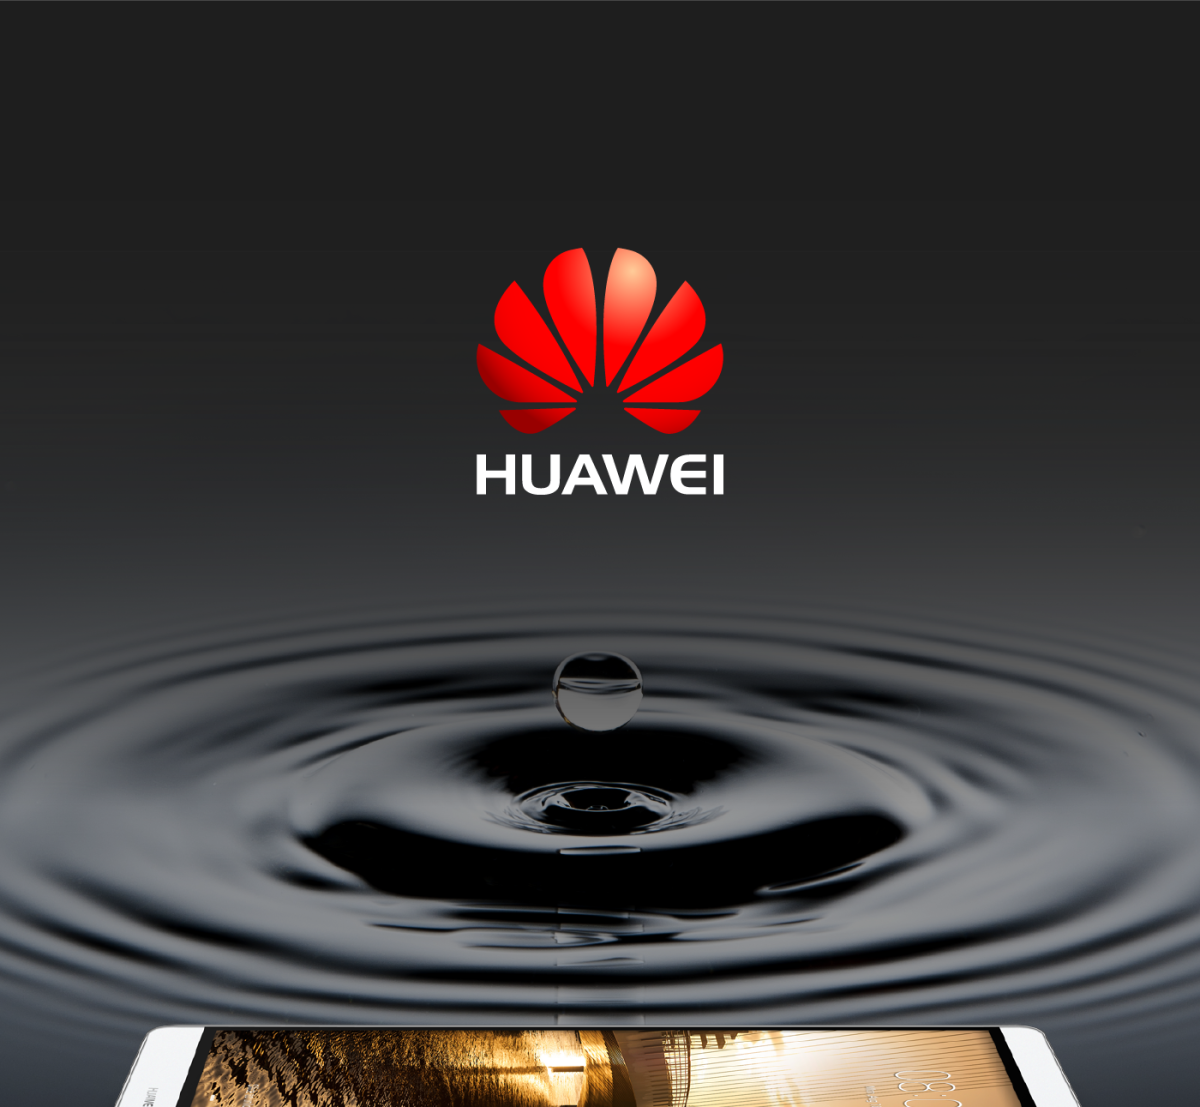 Реклама Хуавей. Реклама компании Huawei. Хуавей логотип. Баннеры Huawei.